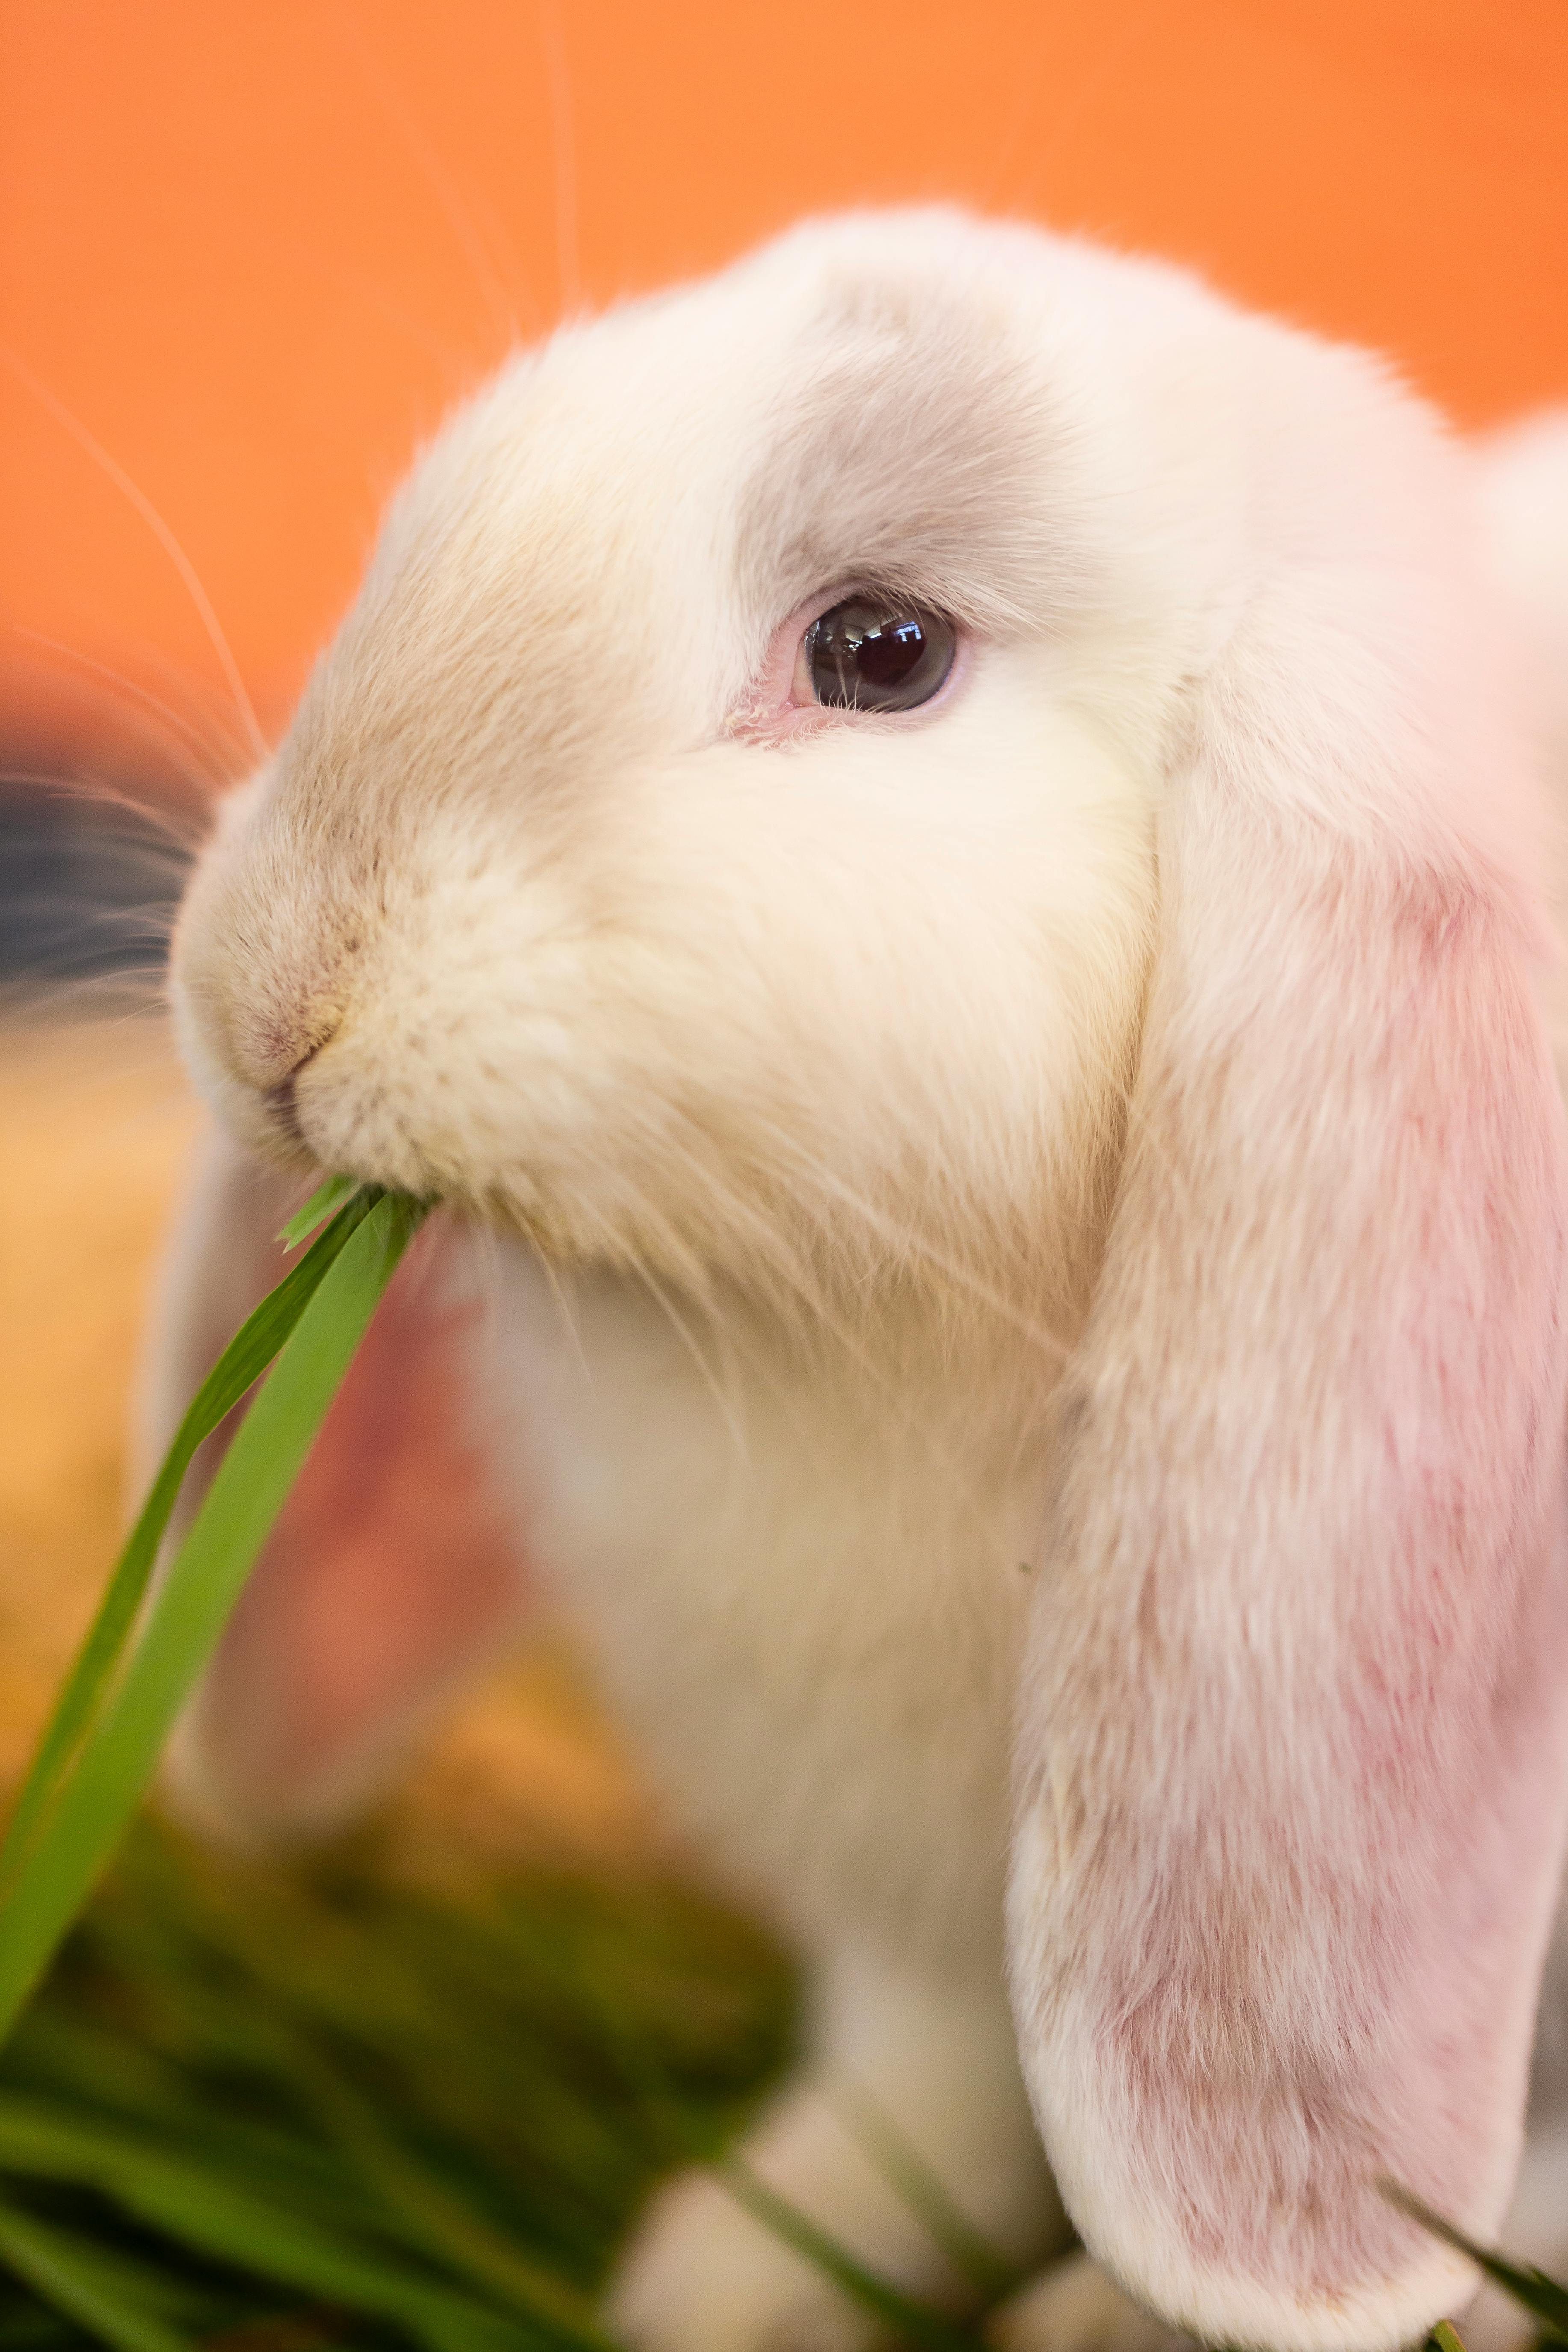 White Rabbit Eating Green Grass · Free Stock Photo